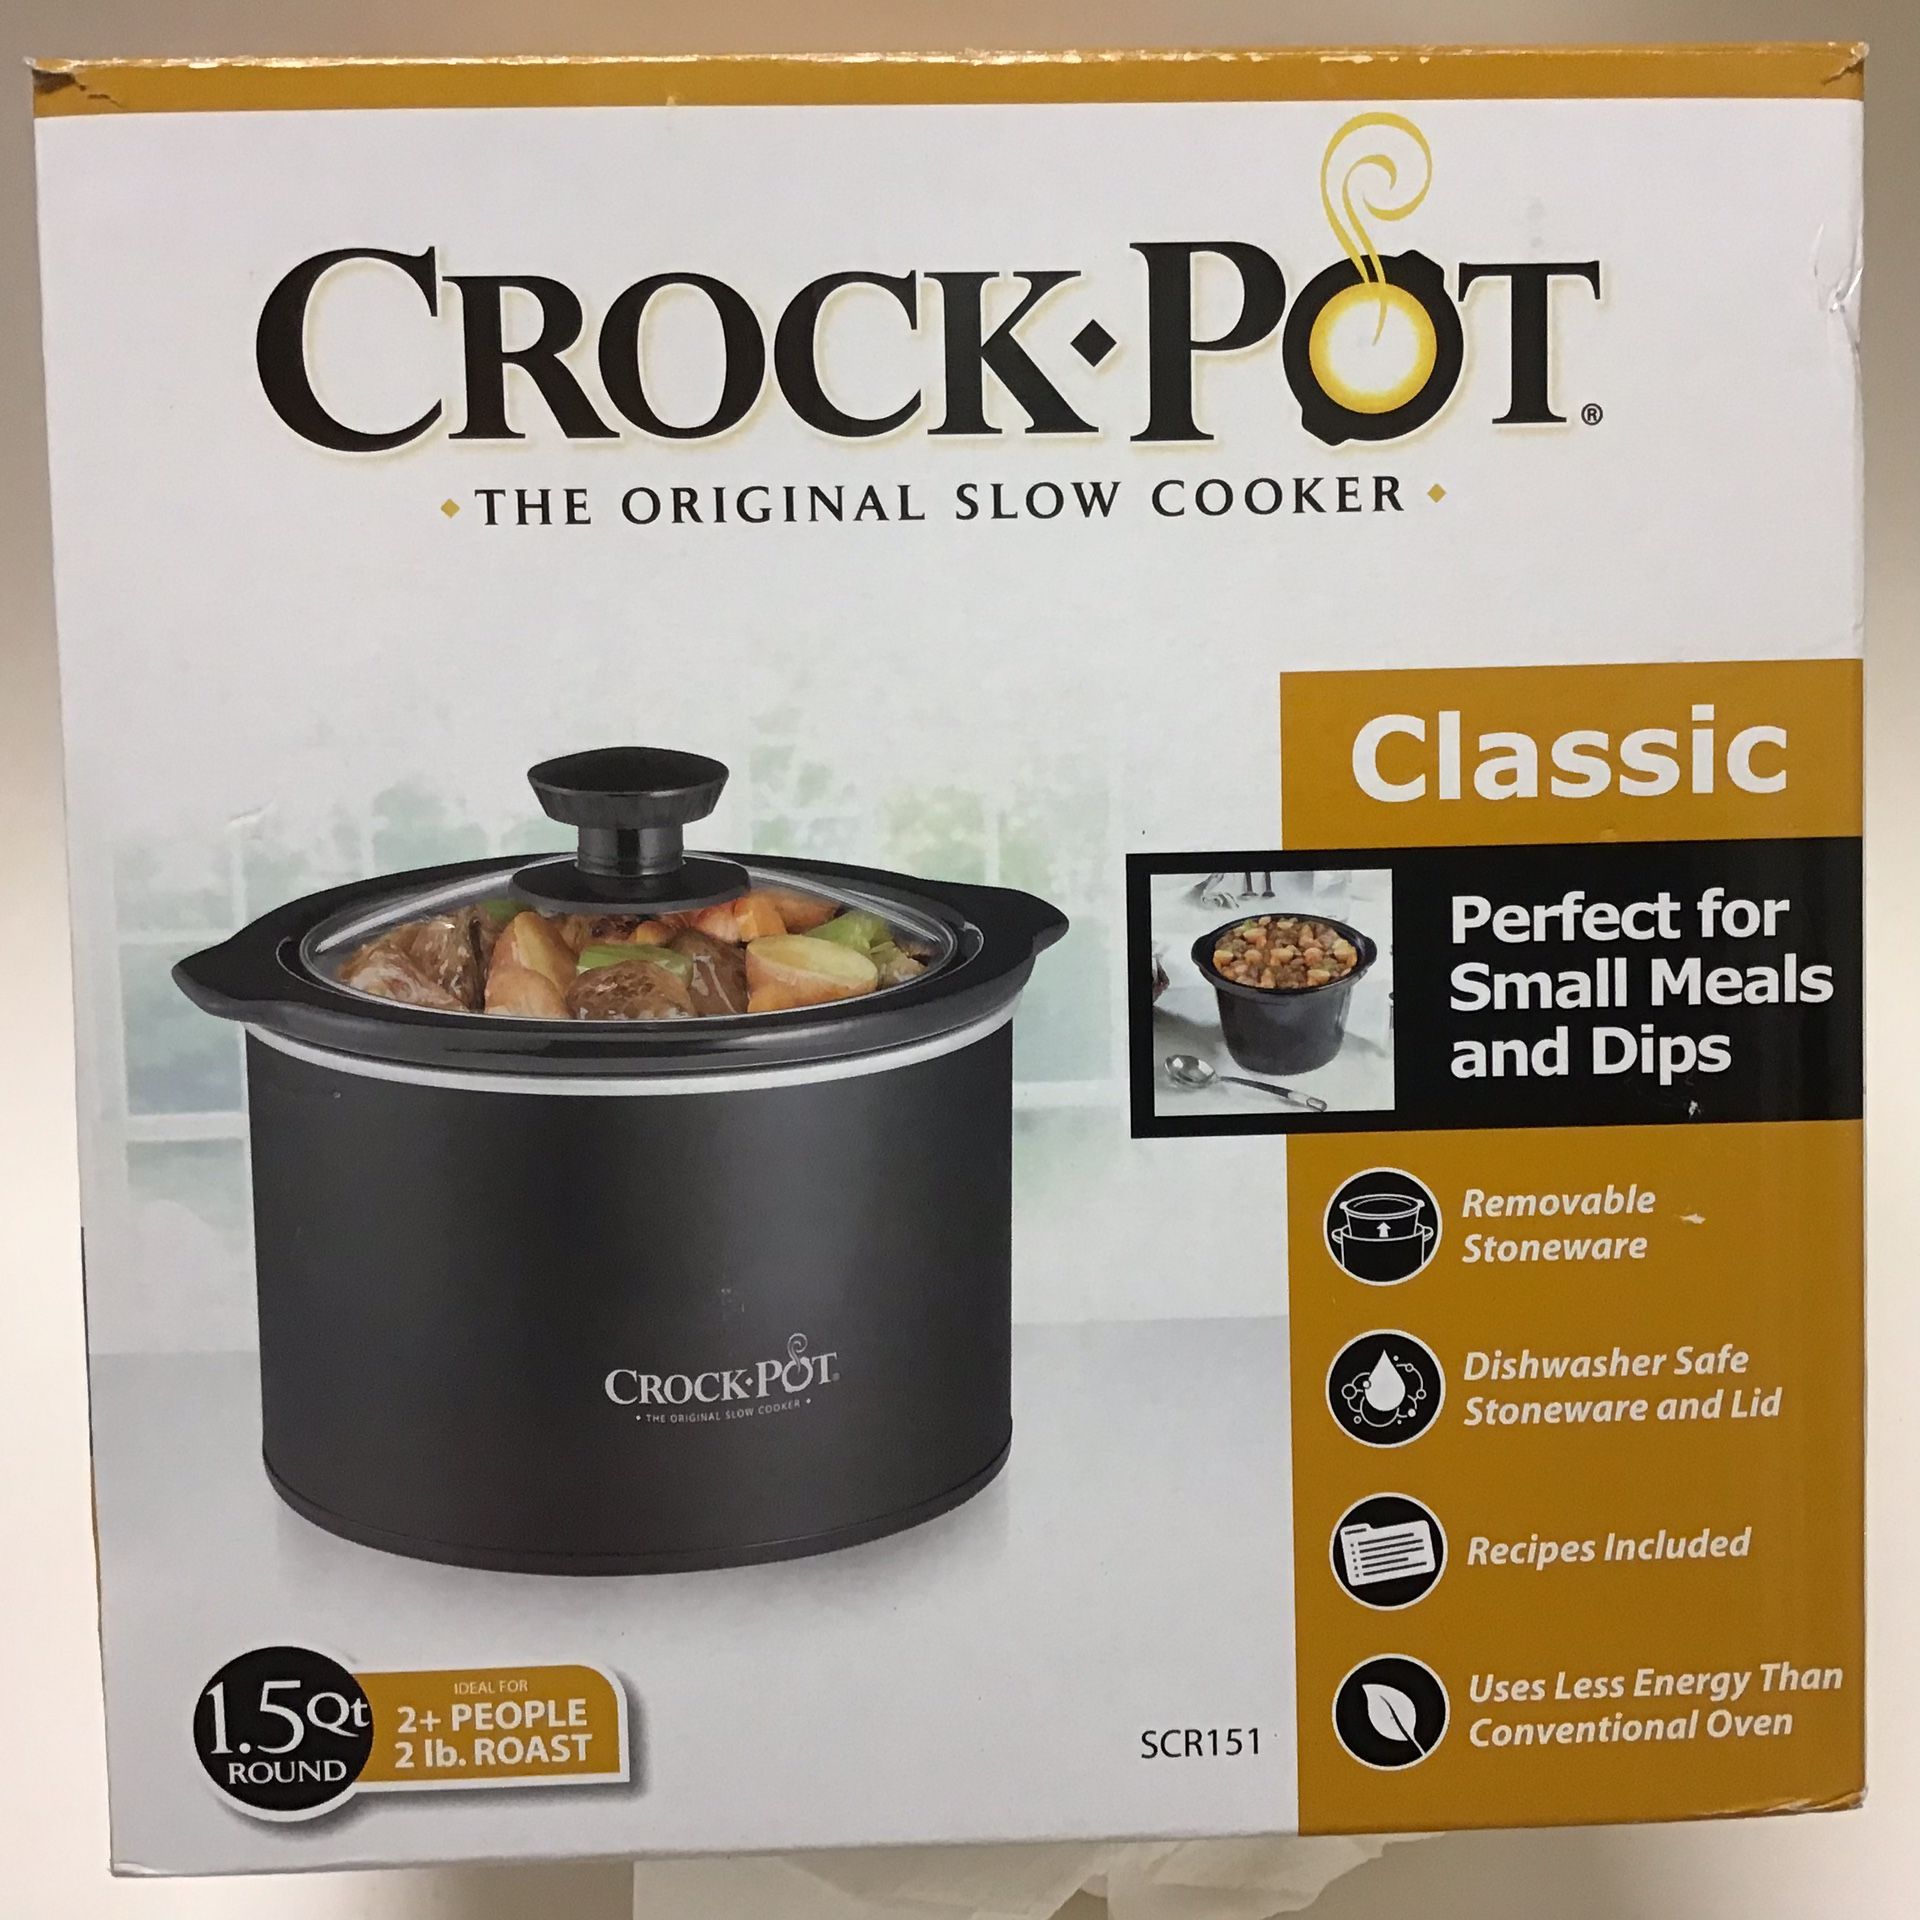 Classic Crock Pot, 1.5 Qt. Round 2+ People 2lb. Roast